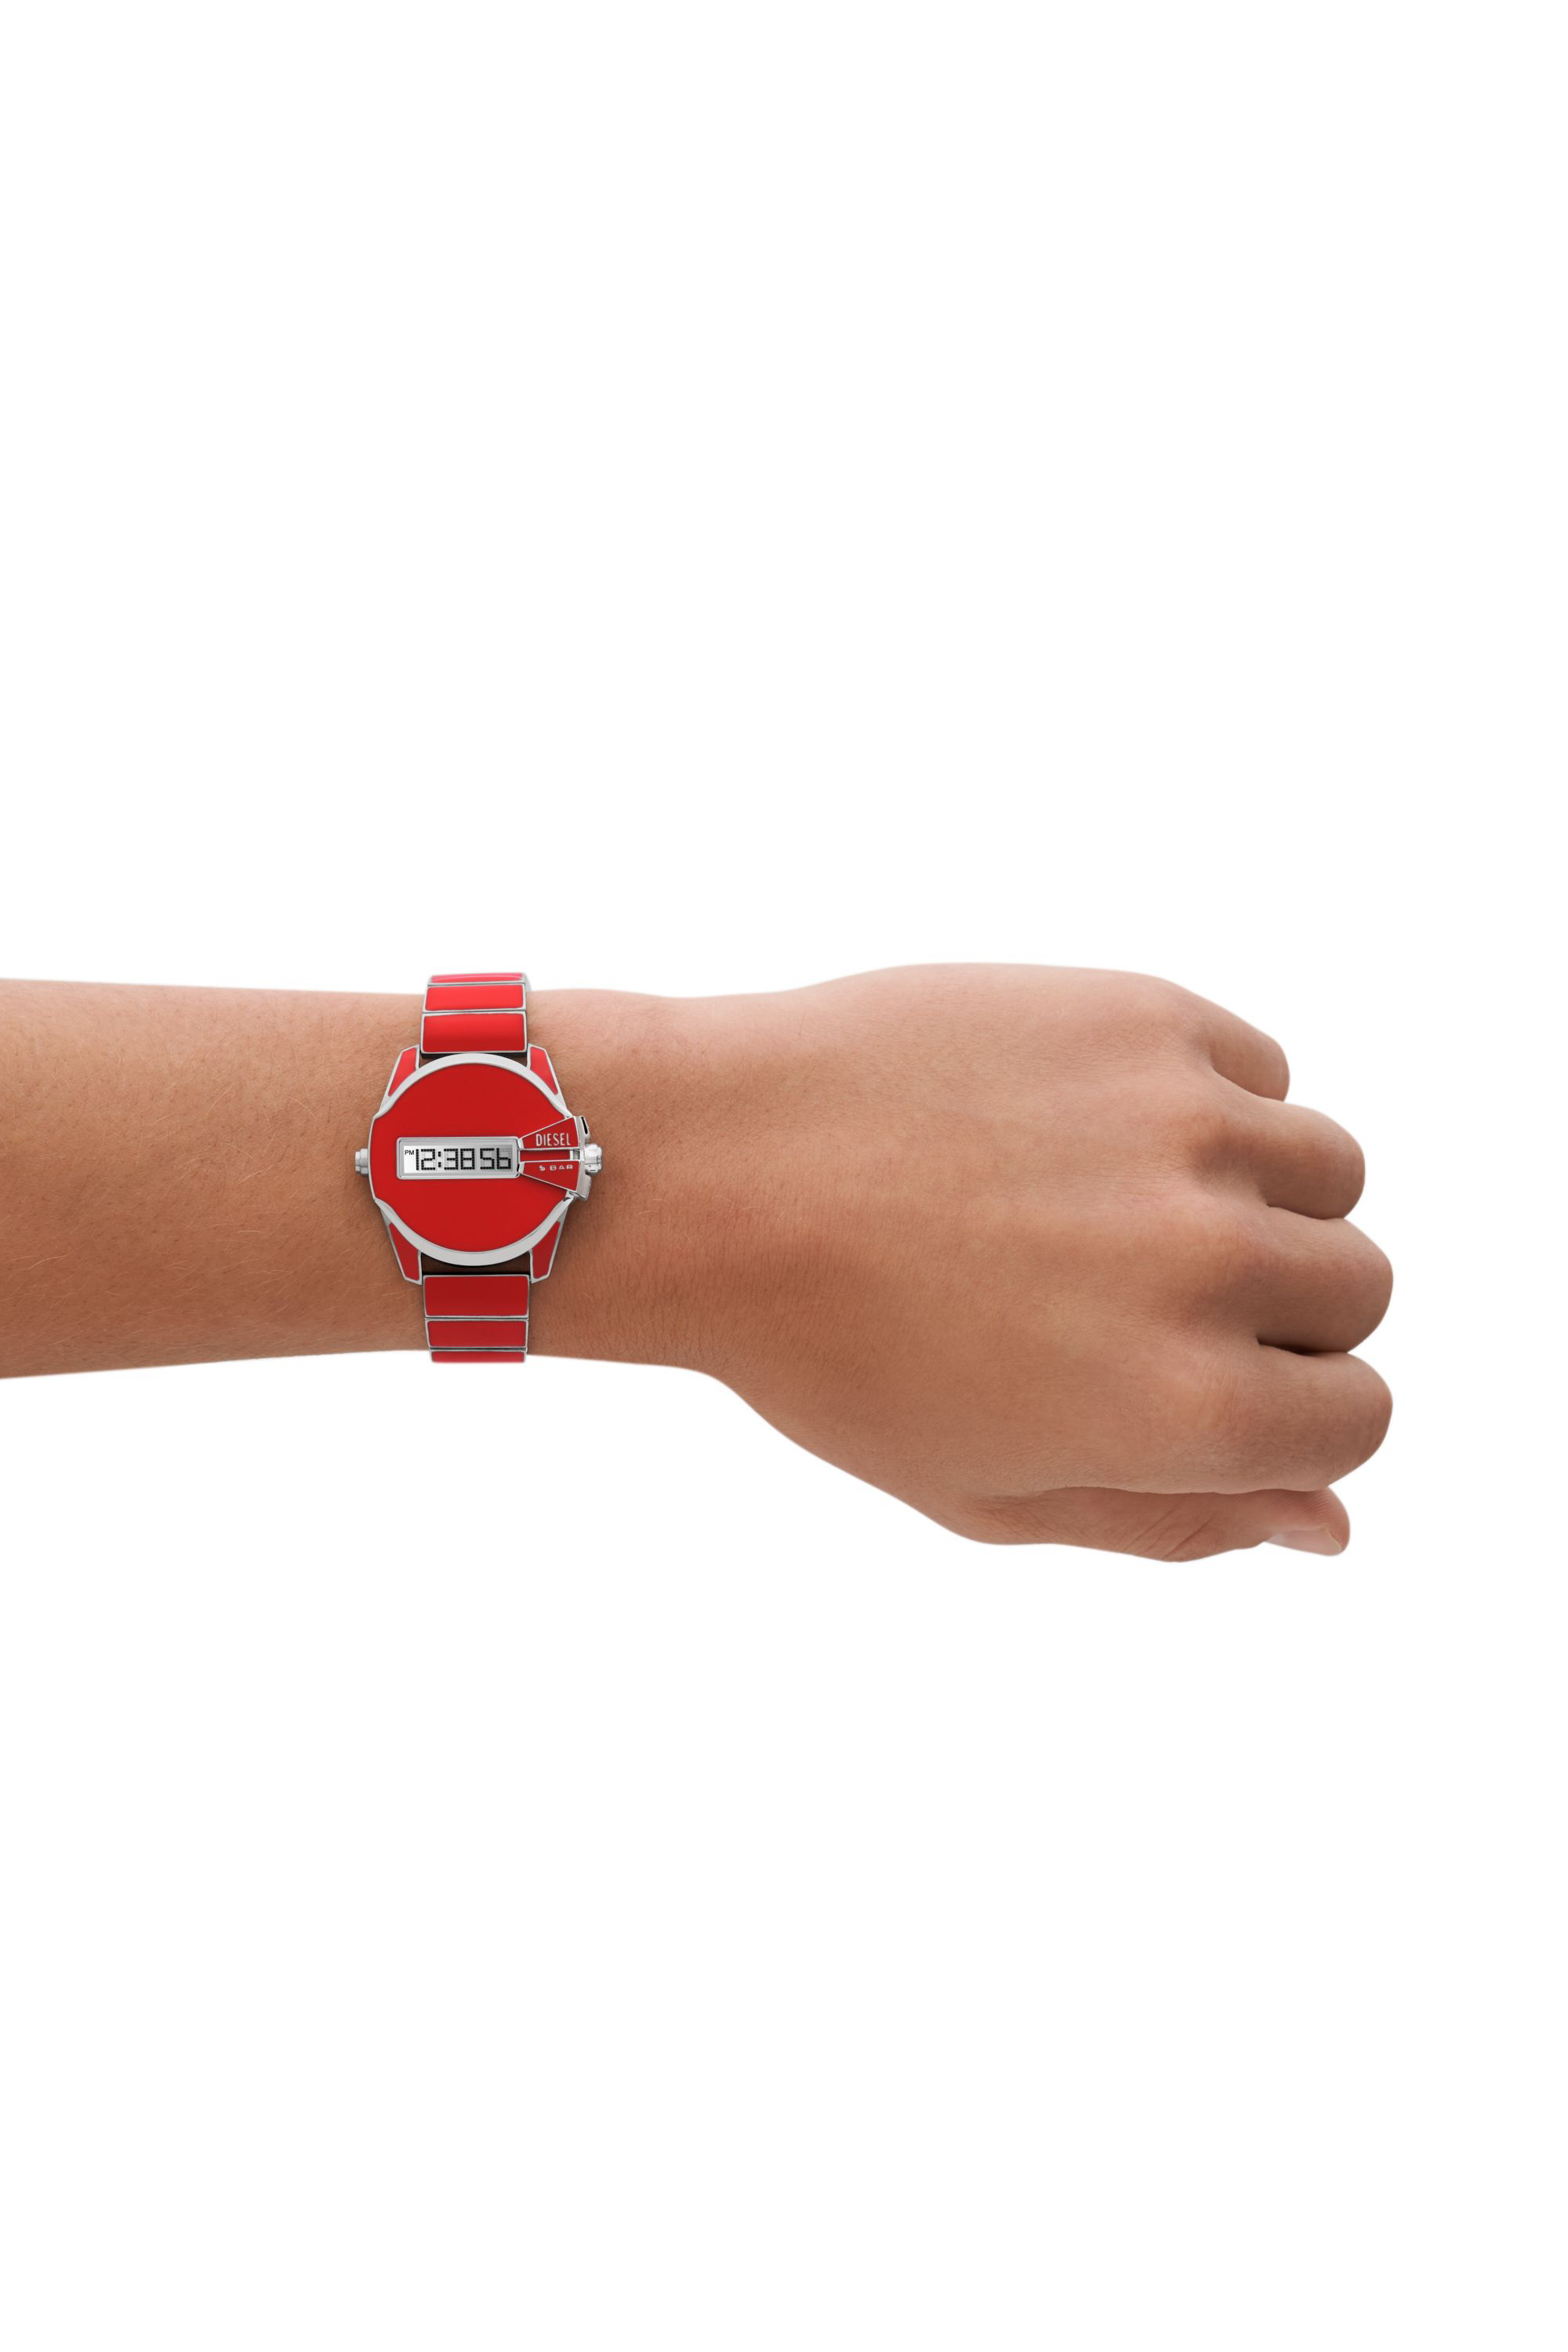 Diesel - DZ2192, Unisex Baby Chief Digital red enamel and stainless steel watch in Red - Image 5